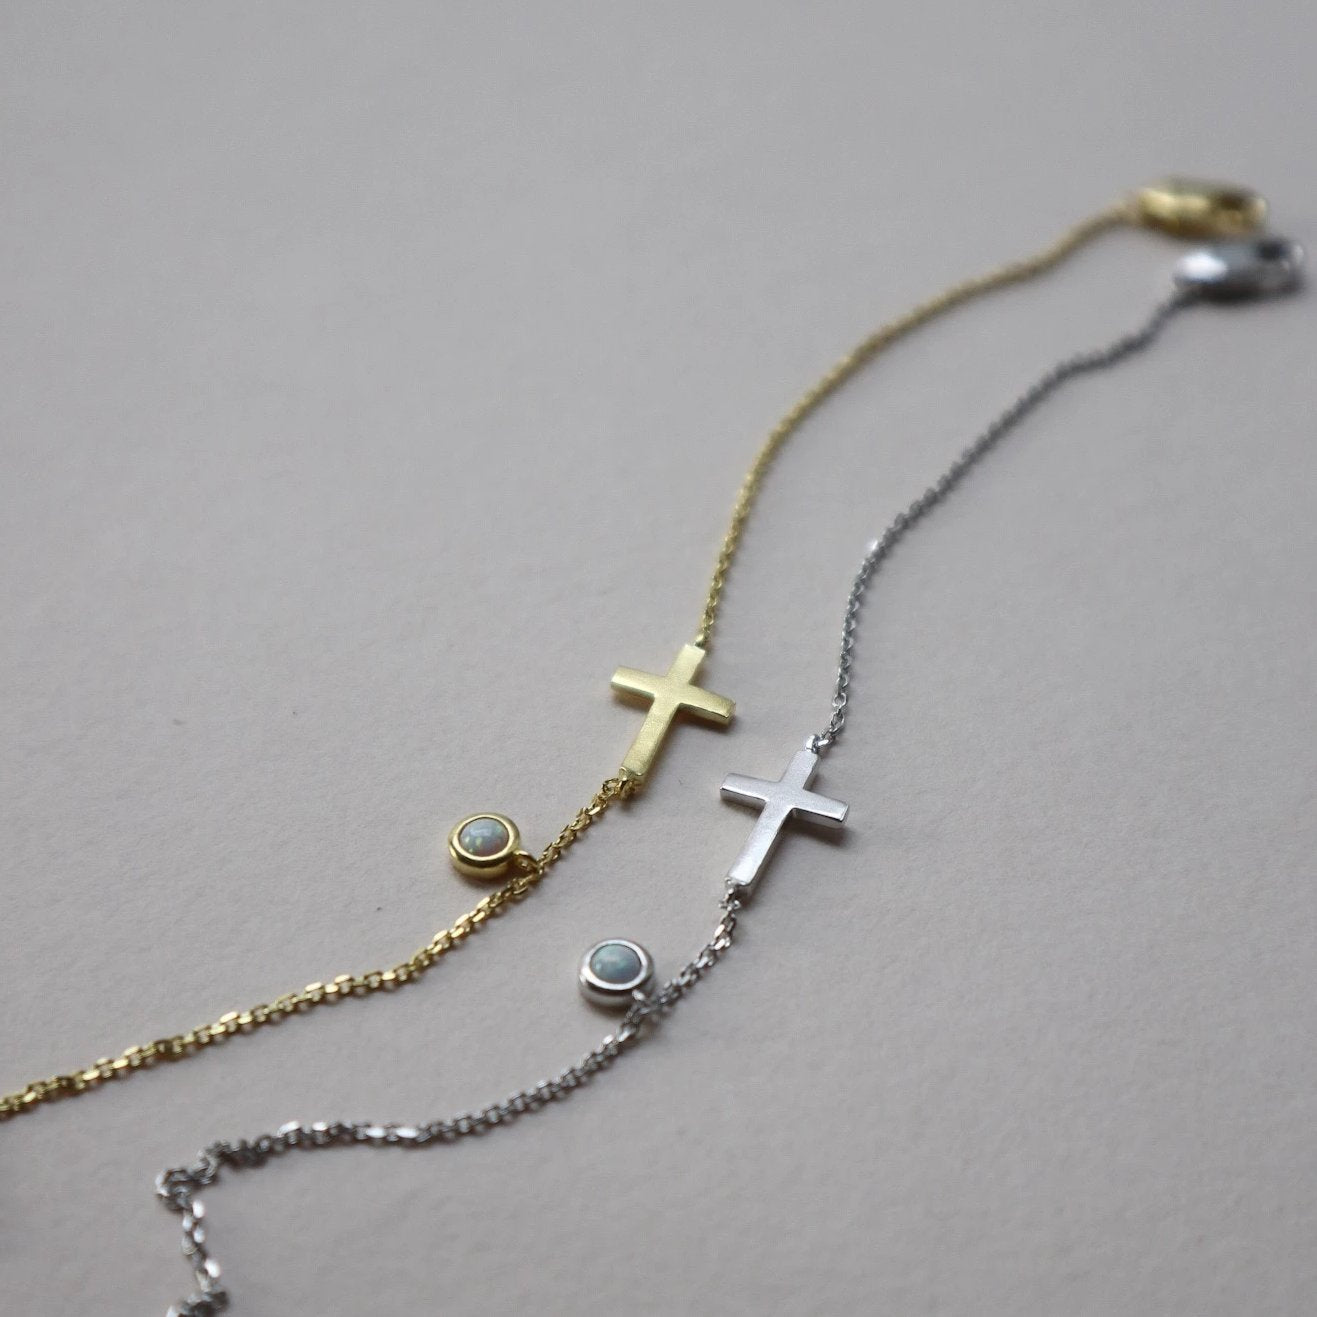 The Cross Chain Bracelet